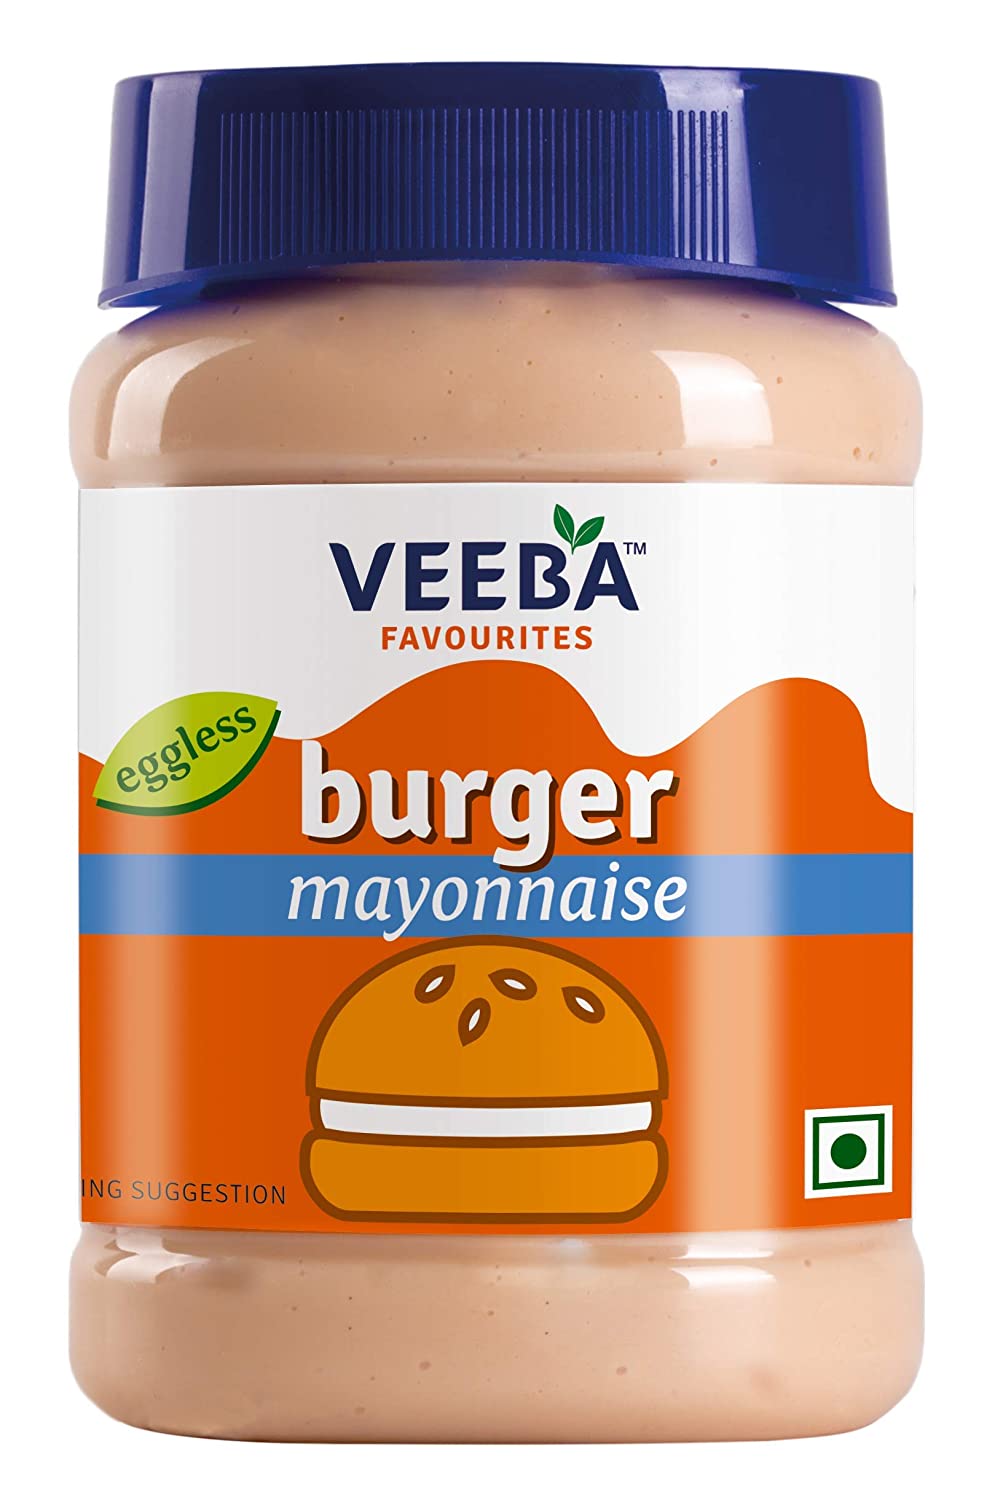 Veeba Burger Mayonnaise Image